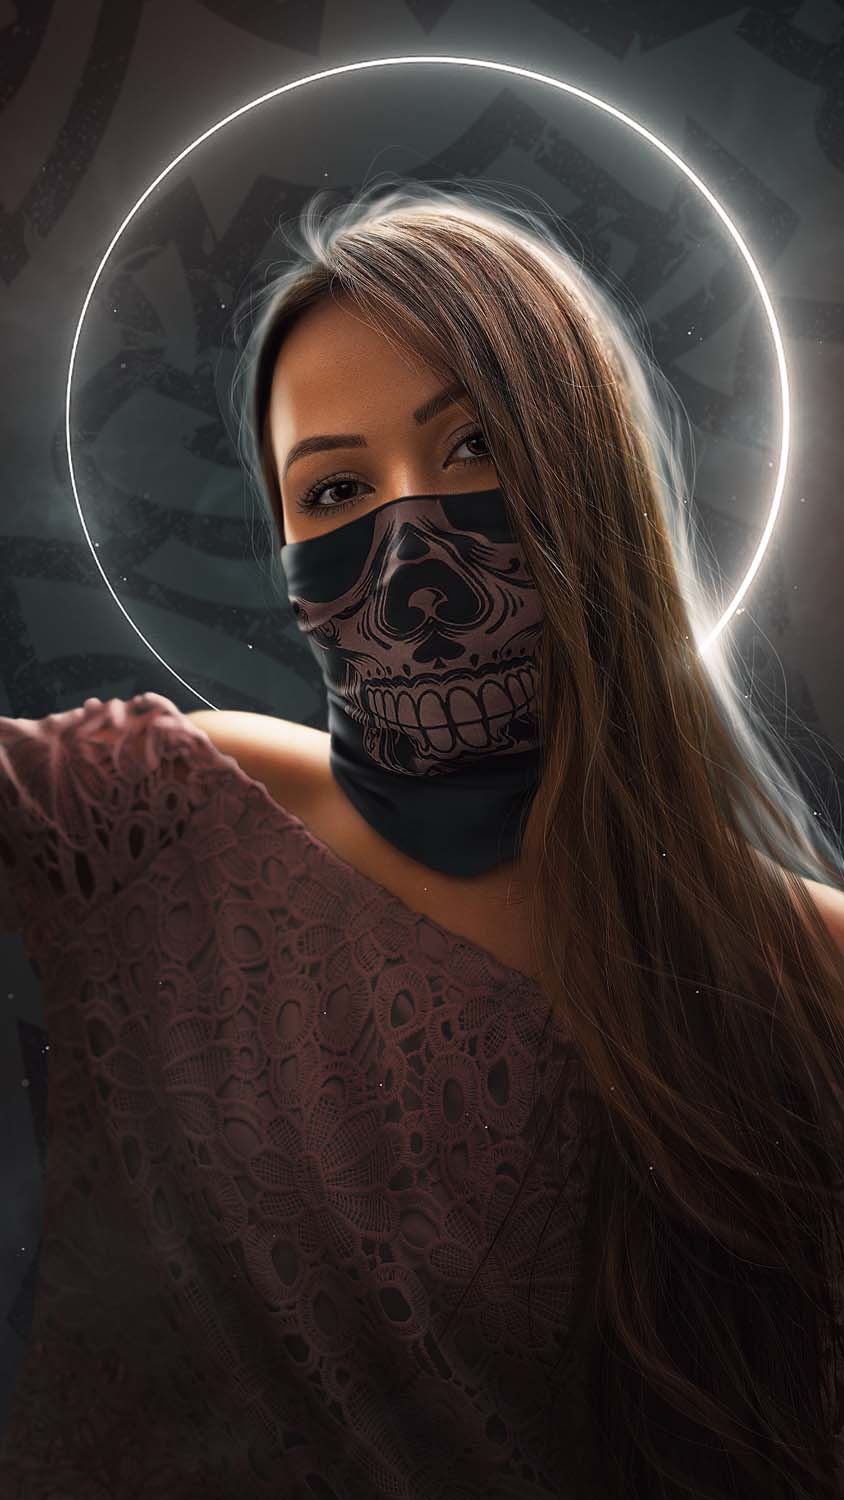 Ghost Mask Girl iPhone Wallpaper HD